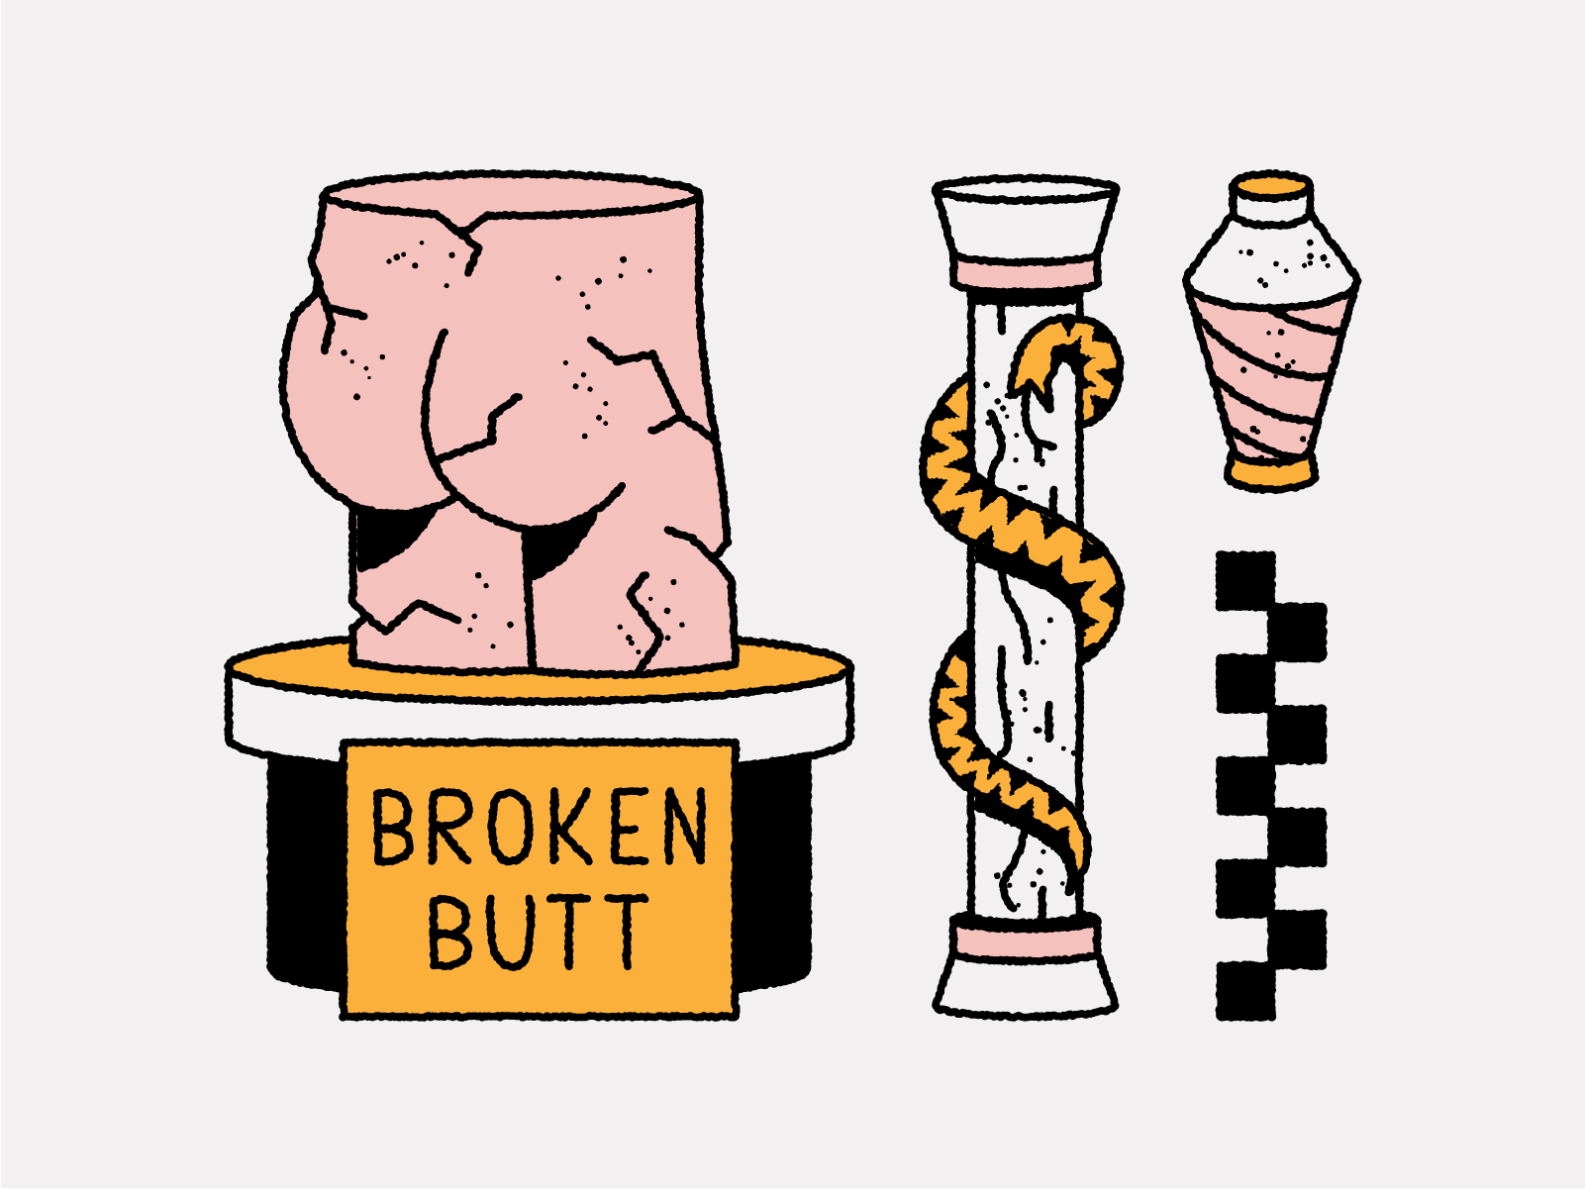 Broken butt by egg doodle on